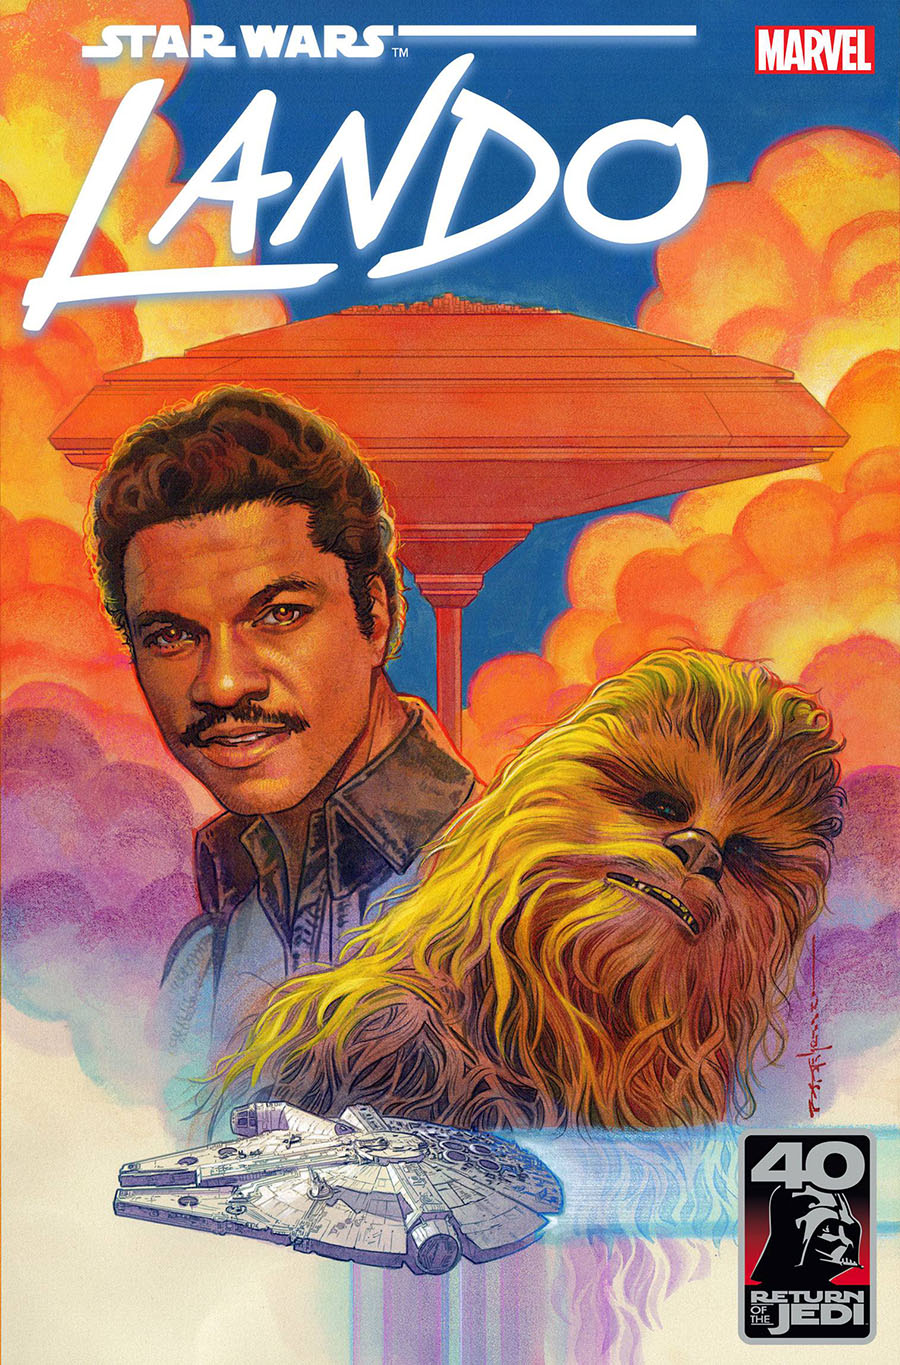 Star Wars Return Of The Jedi Lando #1 (One Shot) Cover C Brian Stelfreeze Cover